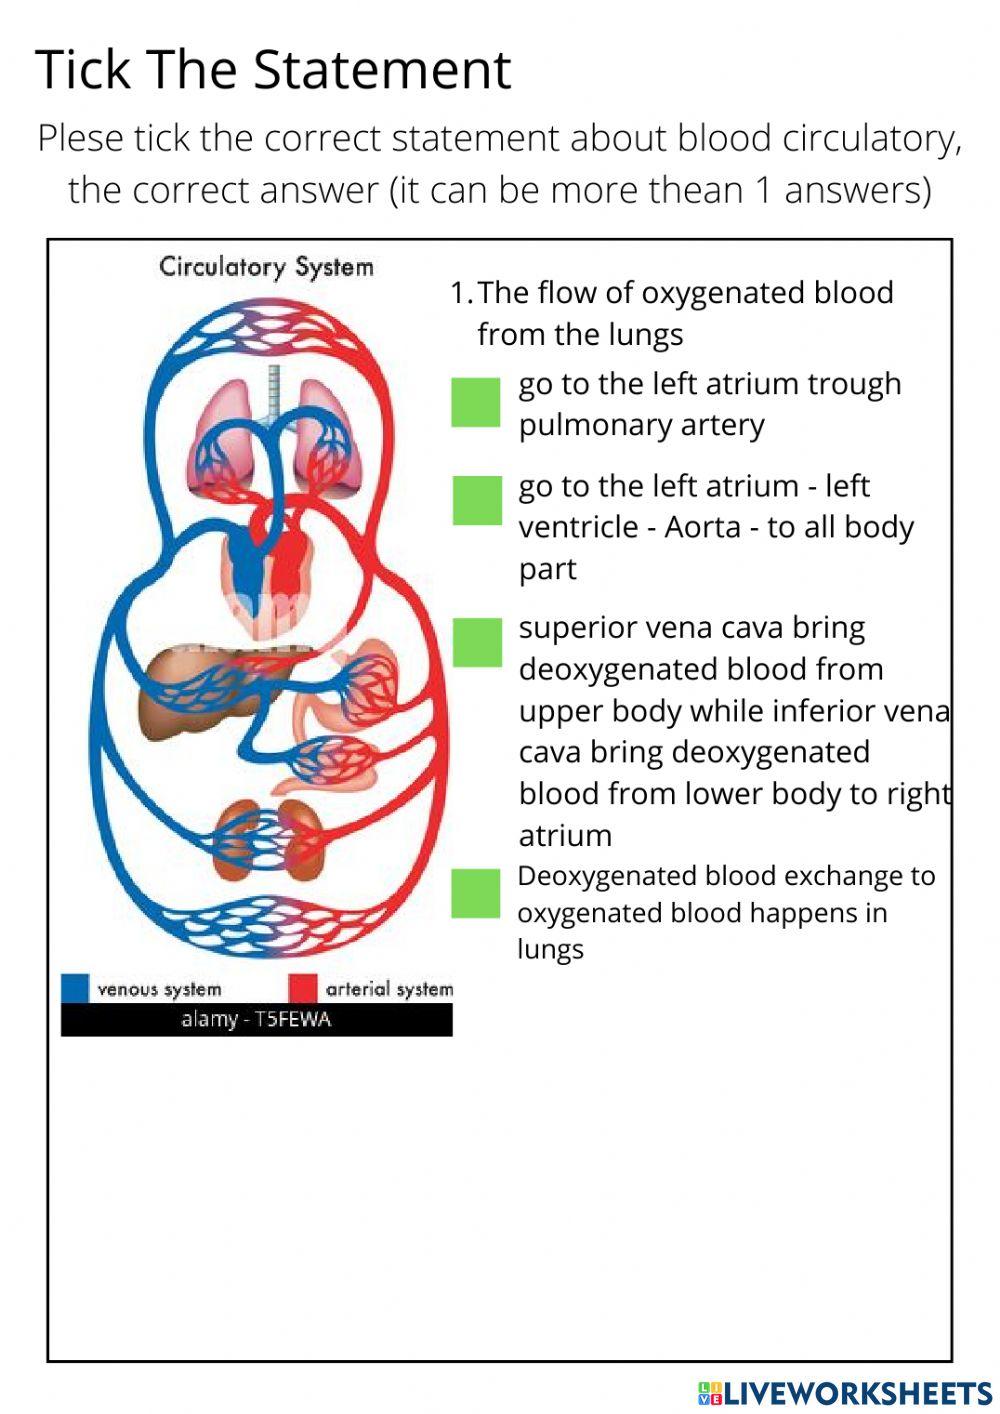 Blood circulatory